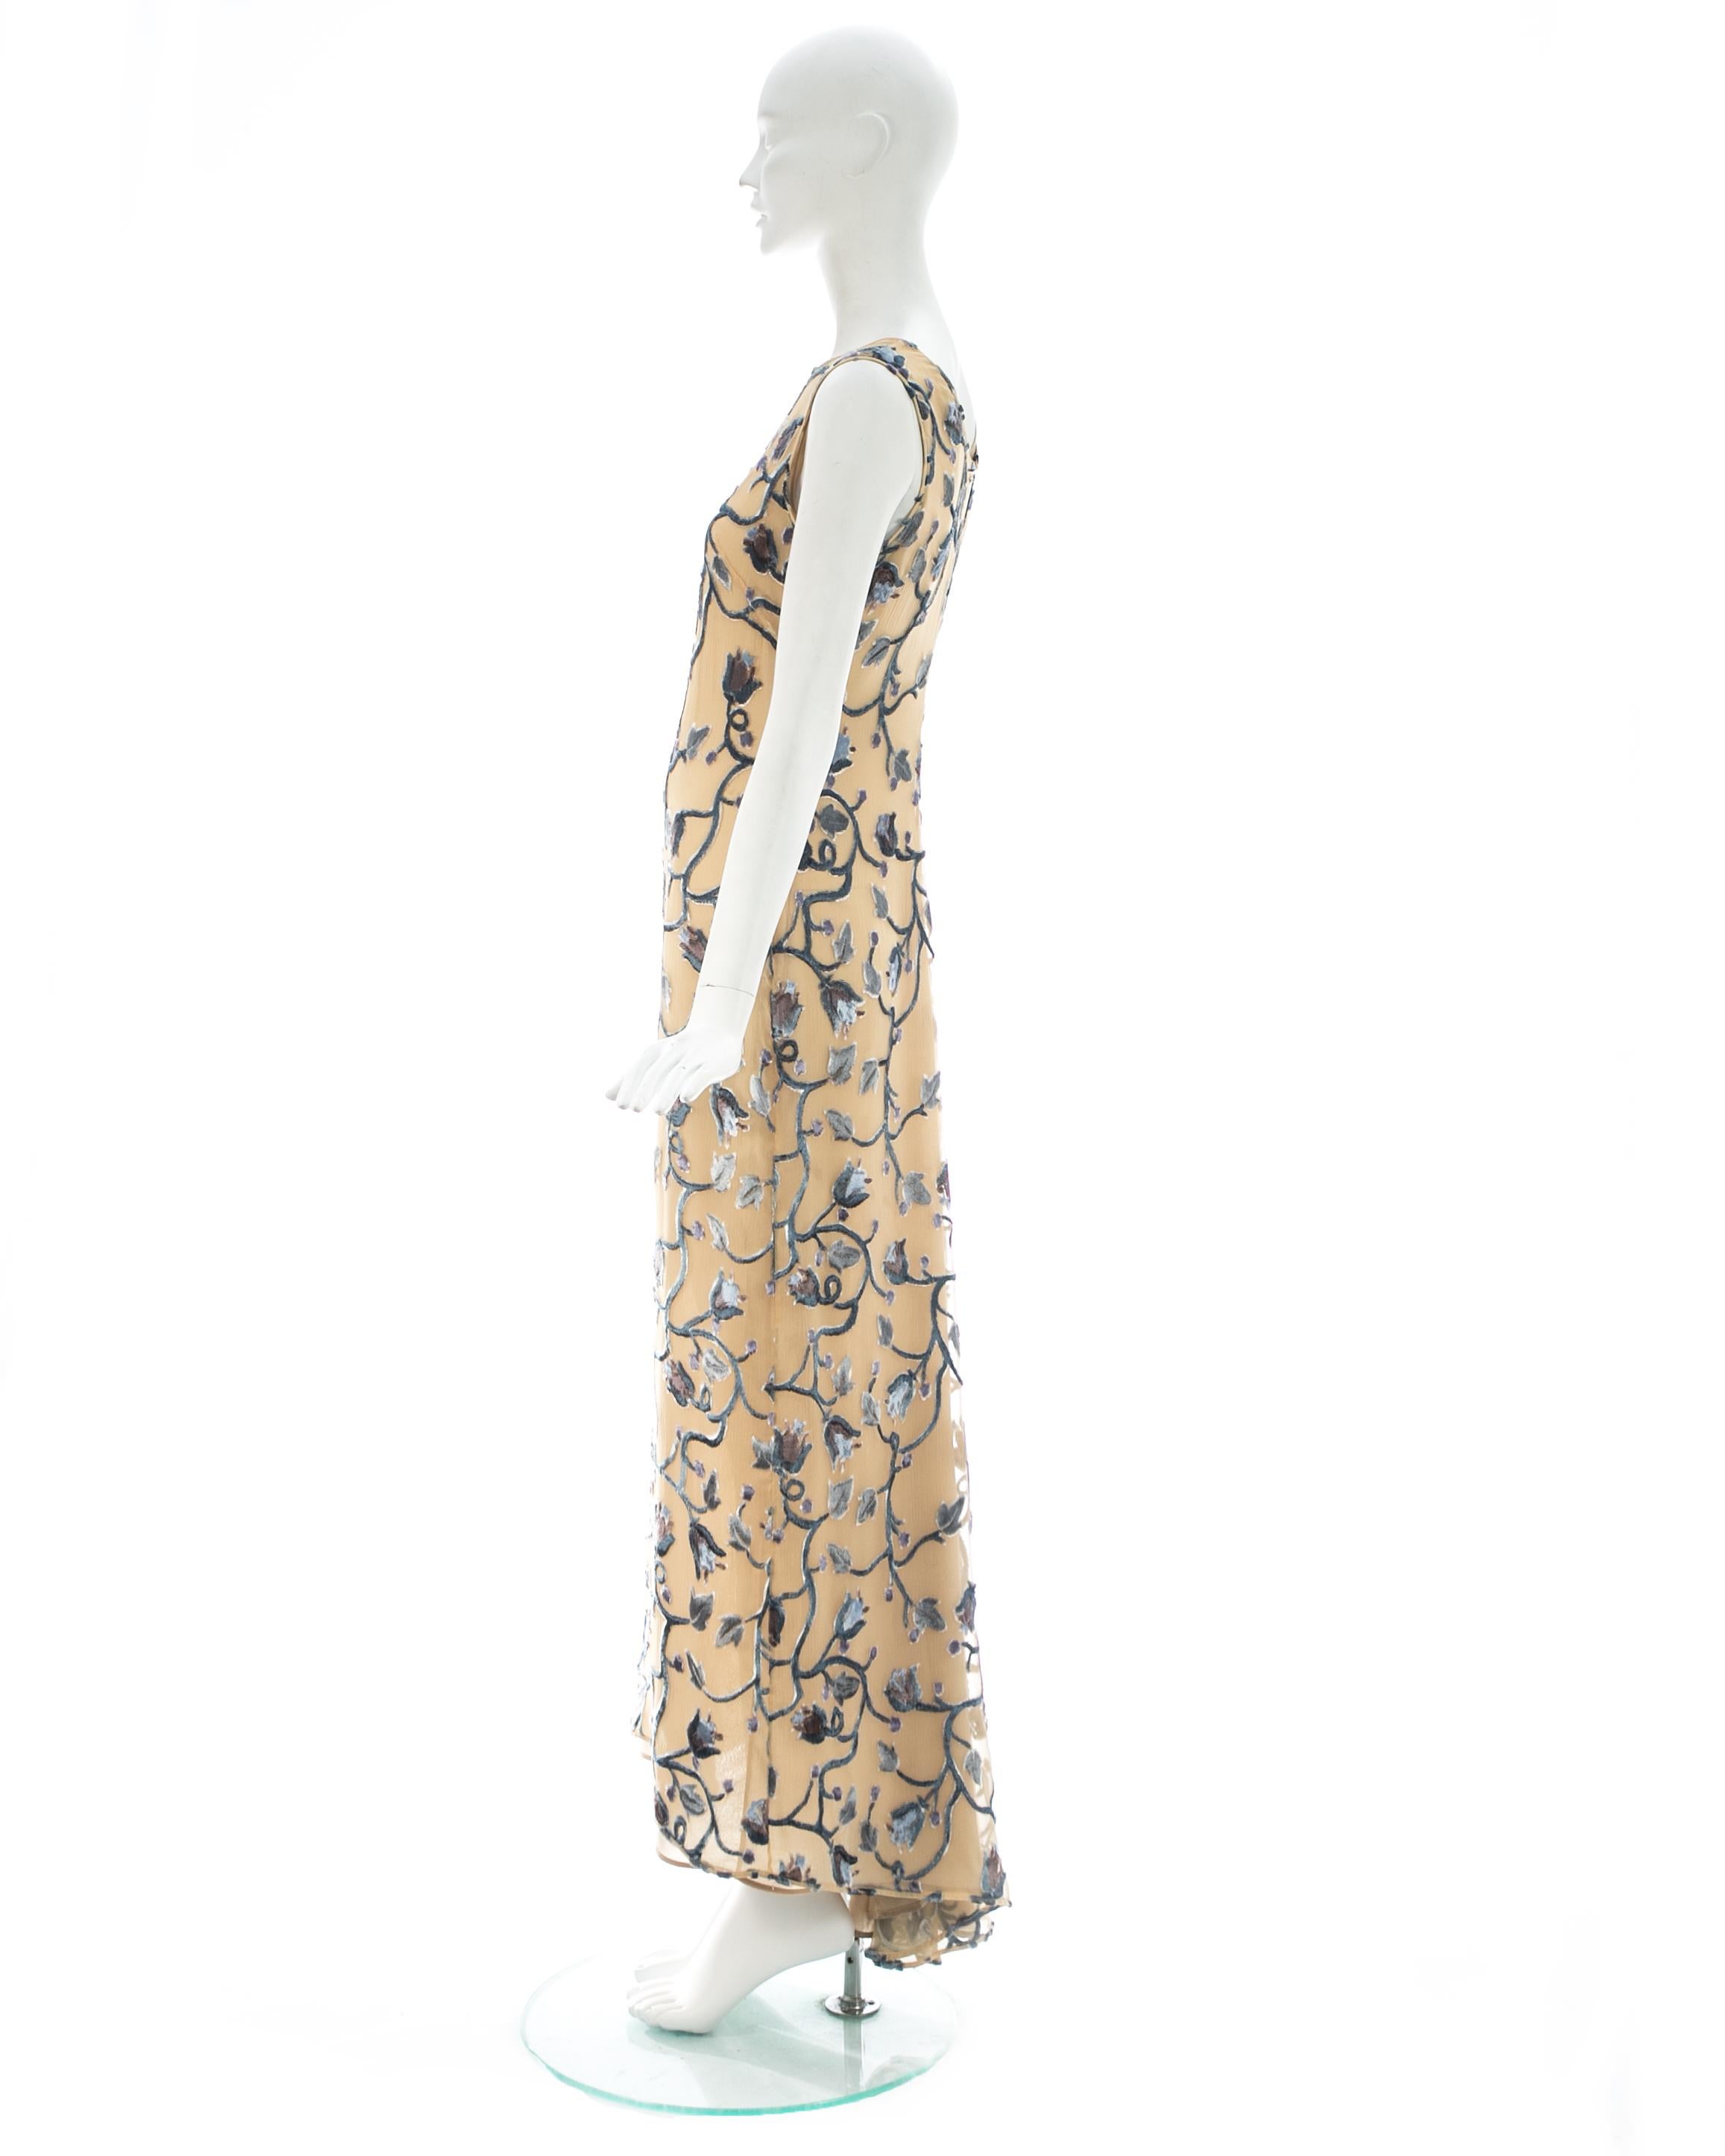 Prada ivory silk devoré floral maxi dress with train and slip dress, ss 1997 1